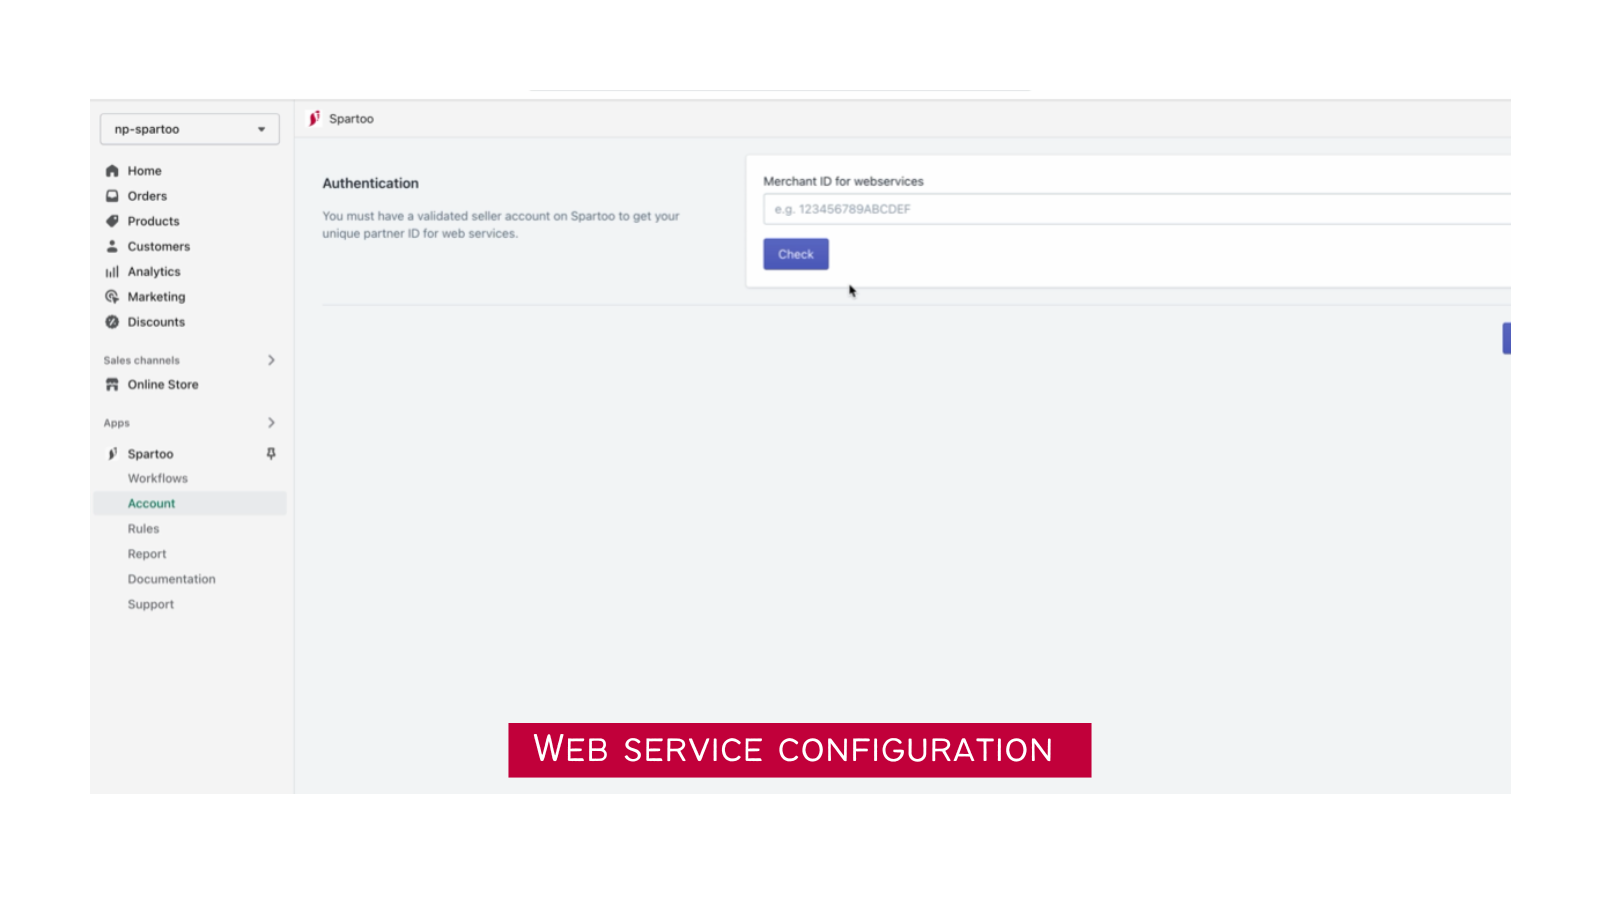 Web service configuration - Spartoo Fashion Marketplace